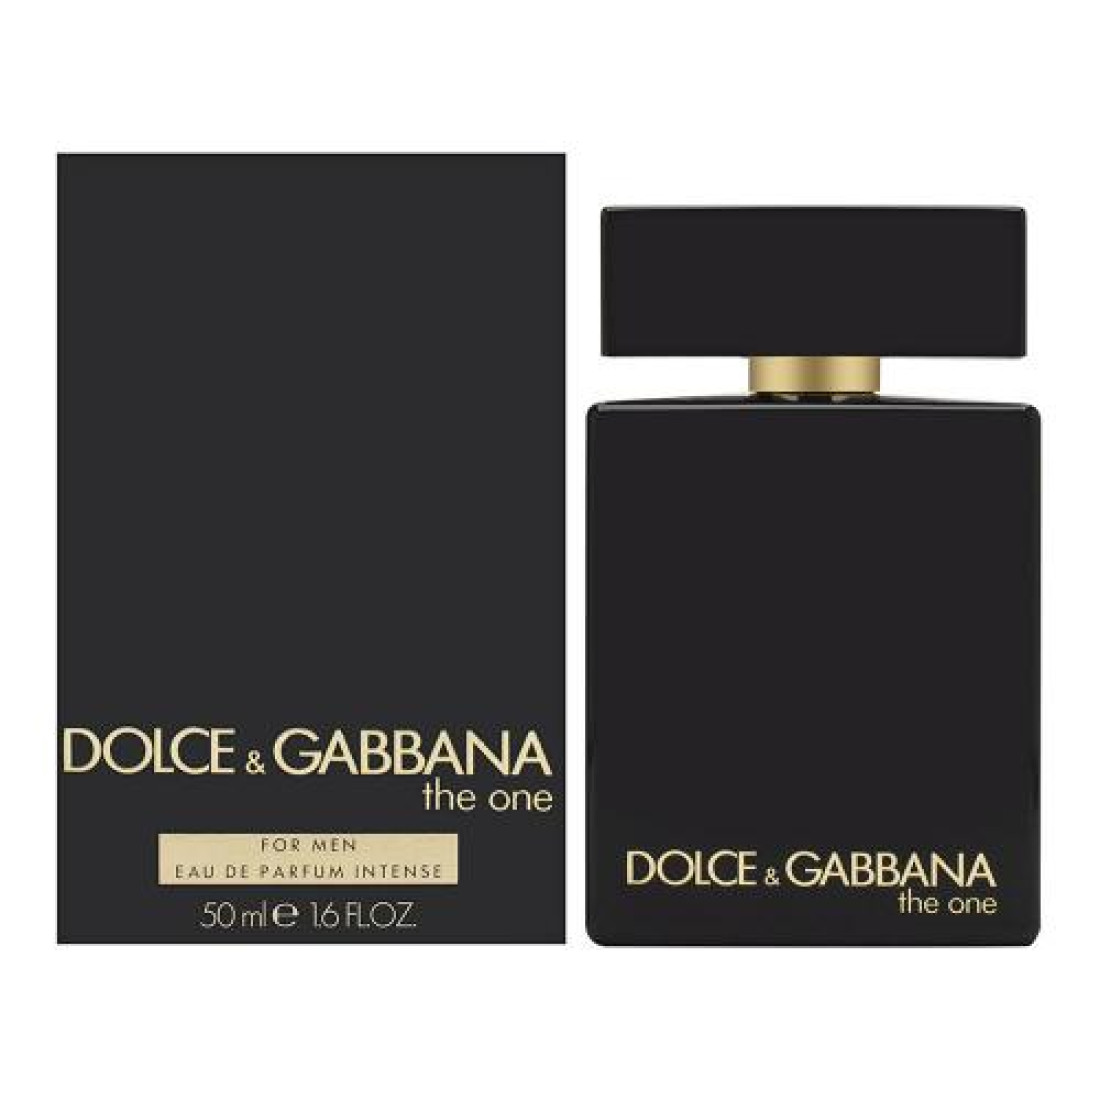 The only one intense dolce. Dolce Gabbana the one intense man 50ml EDP. Dolce Gabbana the one intense мужской. Dolce & Gabbana the one for men intense EDP (50 мл). Dolce Gabbana the one for men Eau de Parfum.